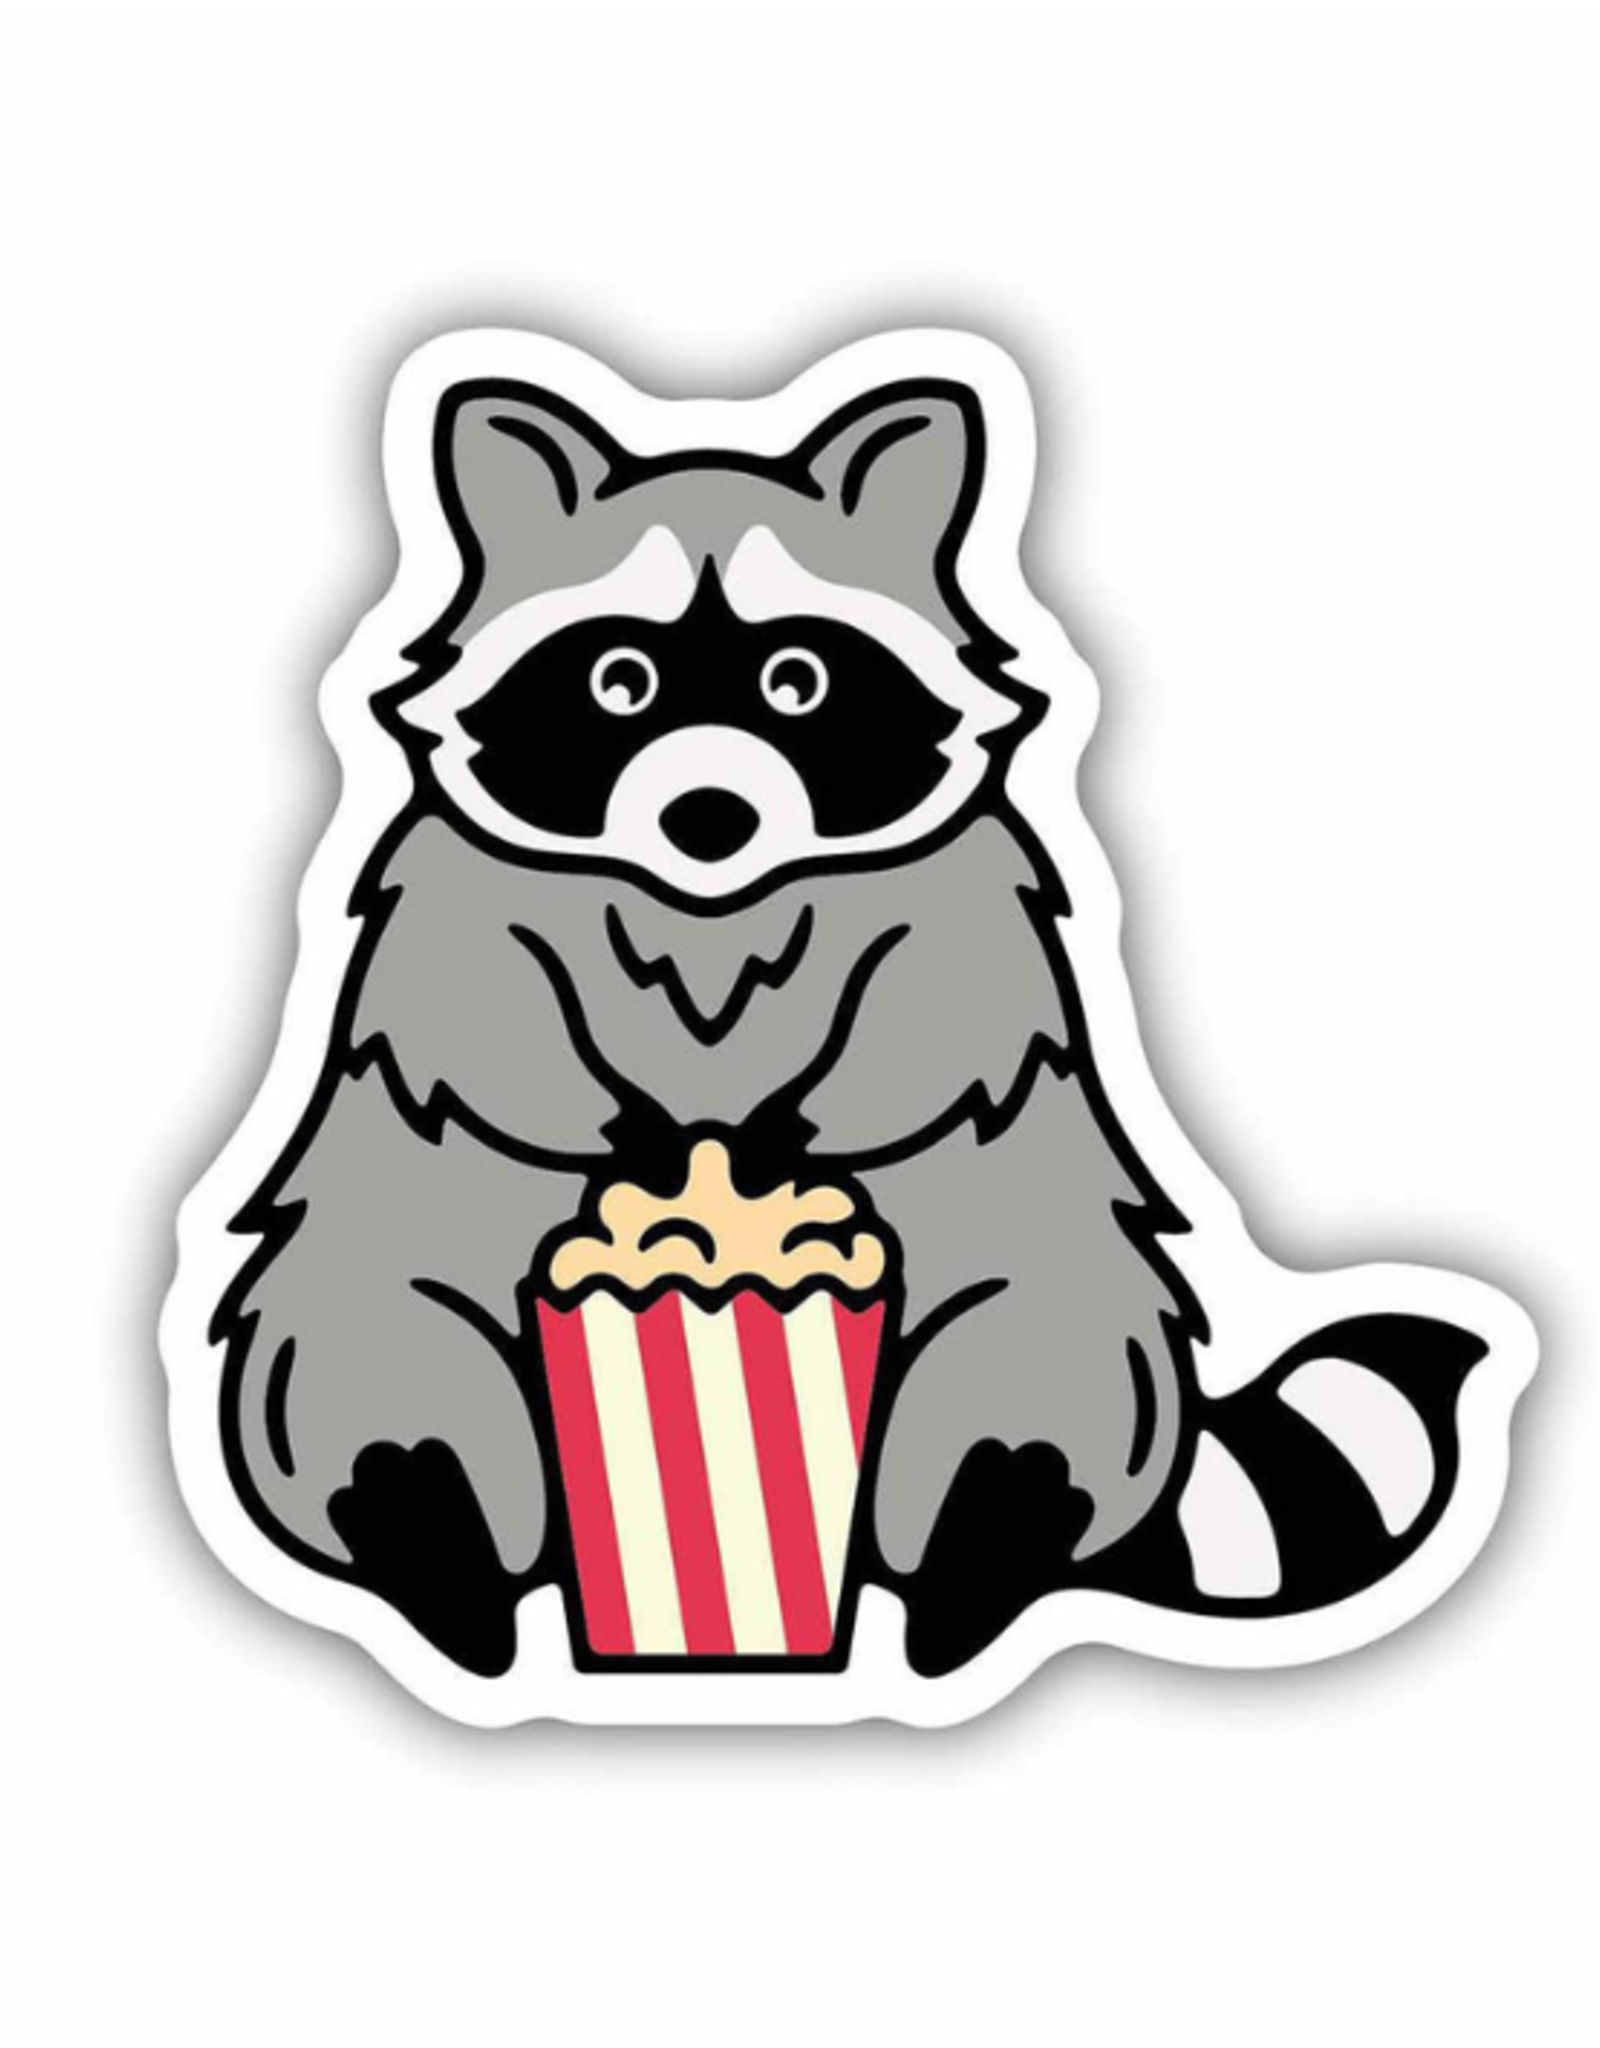 Stickers Northwest Inc. Stickers Northwest Inc. - Racoon with Popcorn Sticker